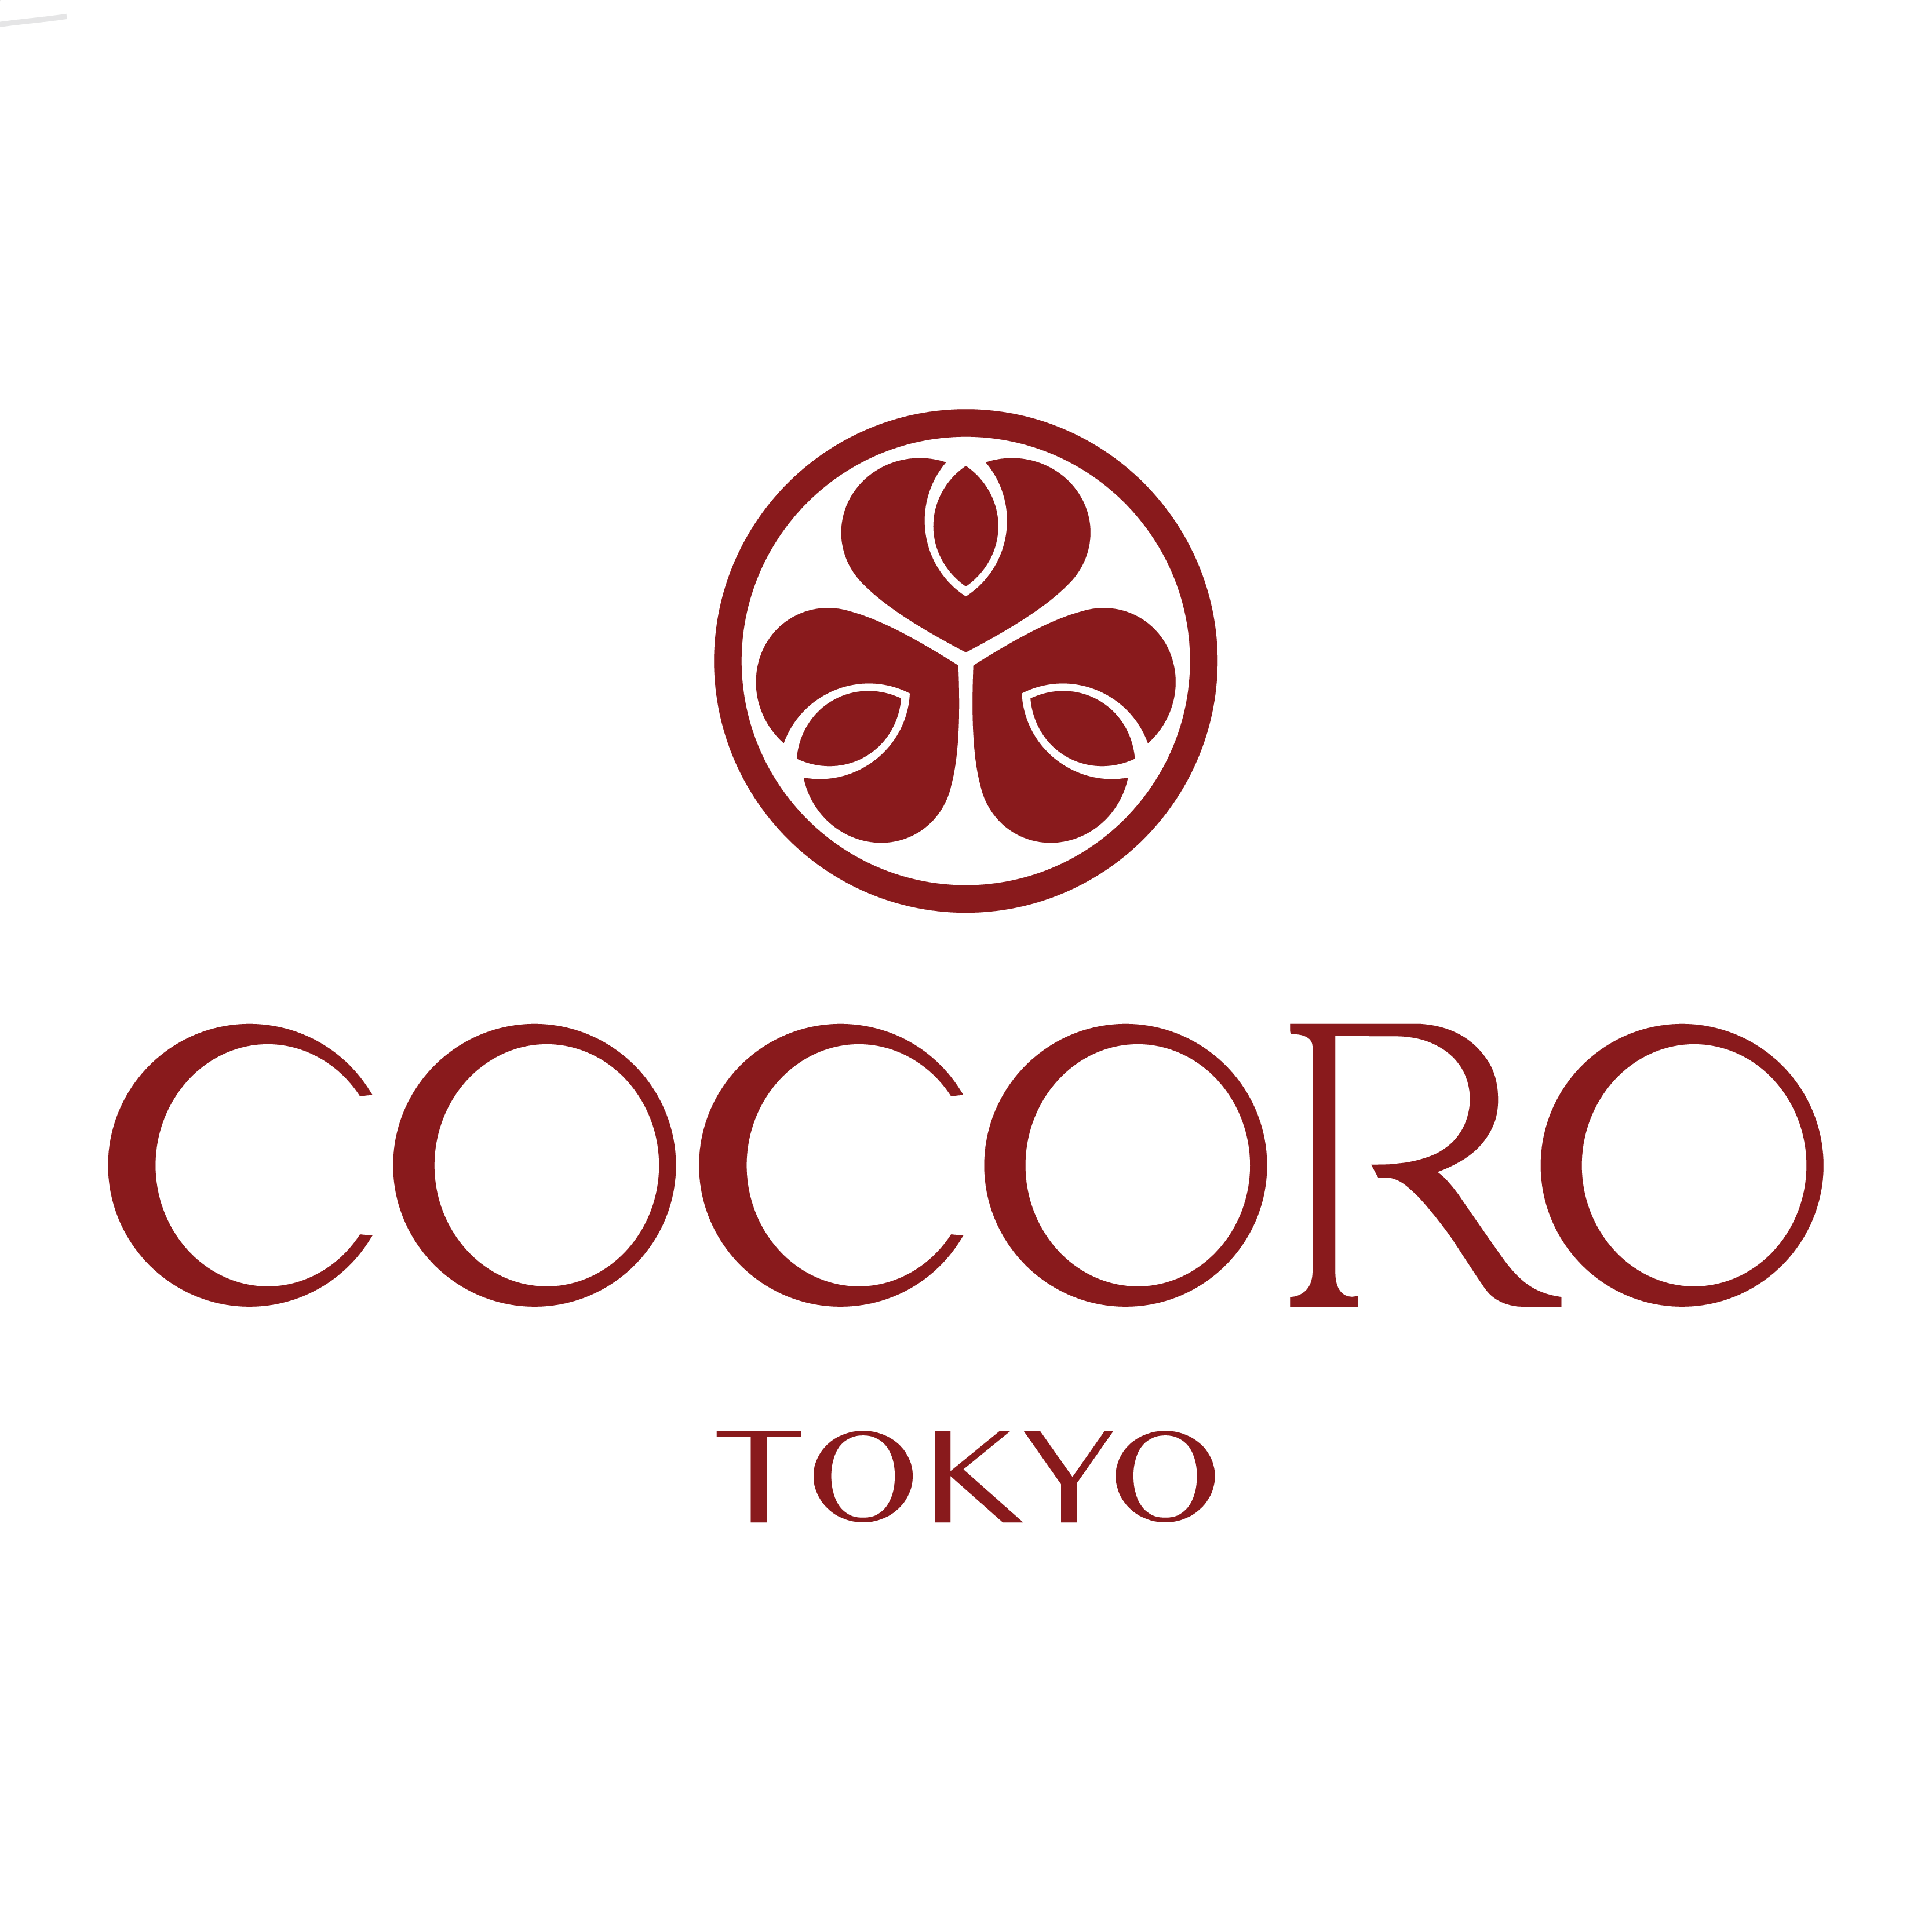 Cocoro Tokyo